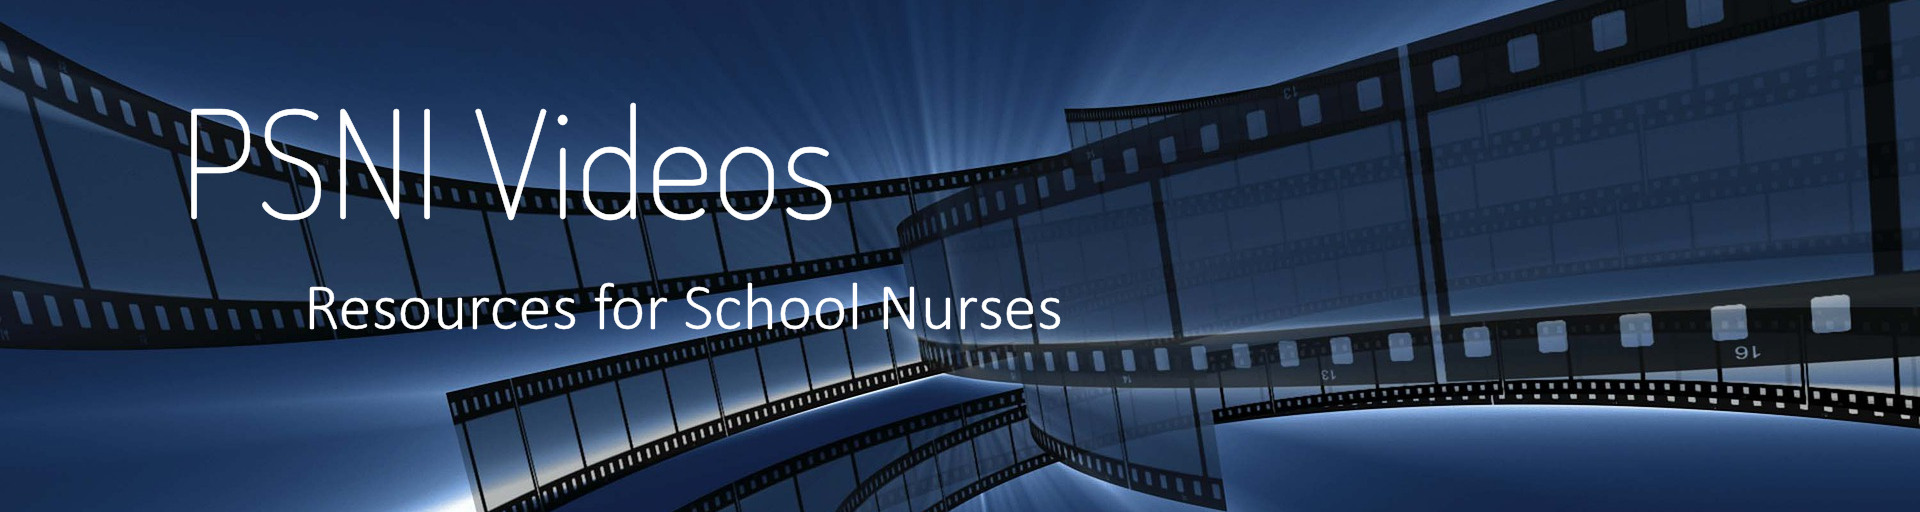 PSNI Video resources for school nurses